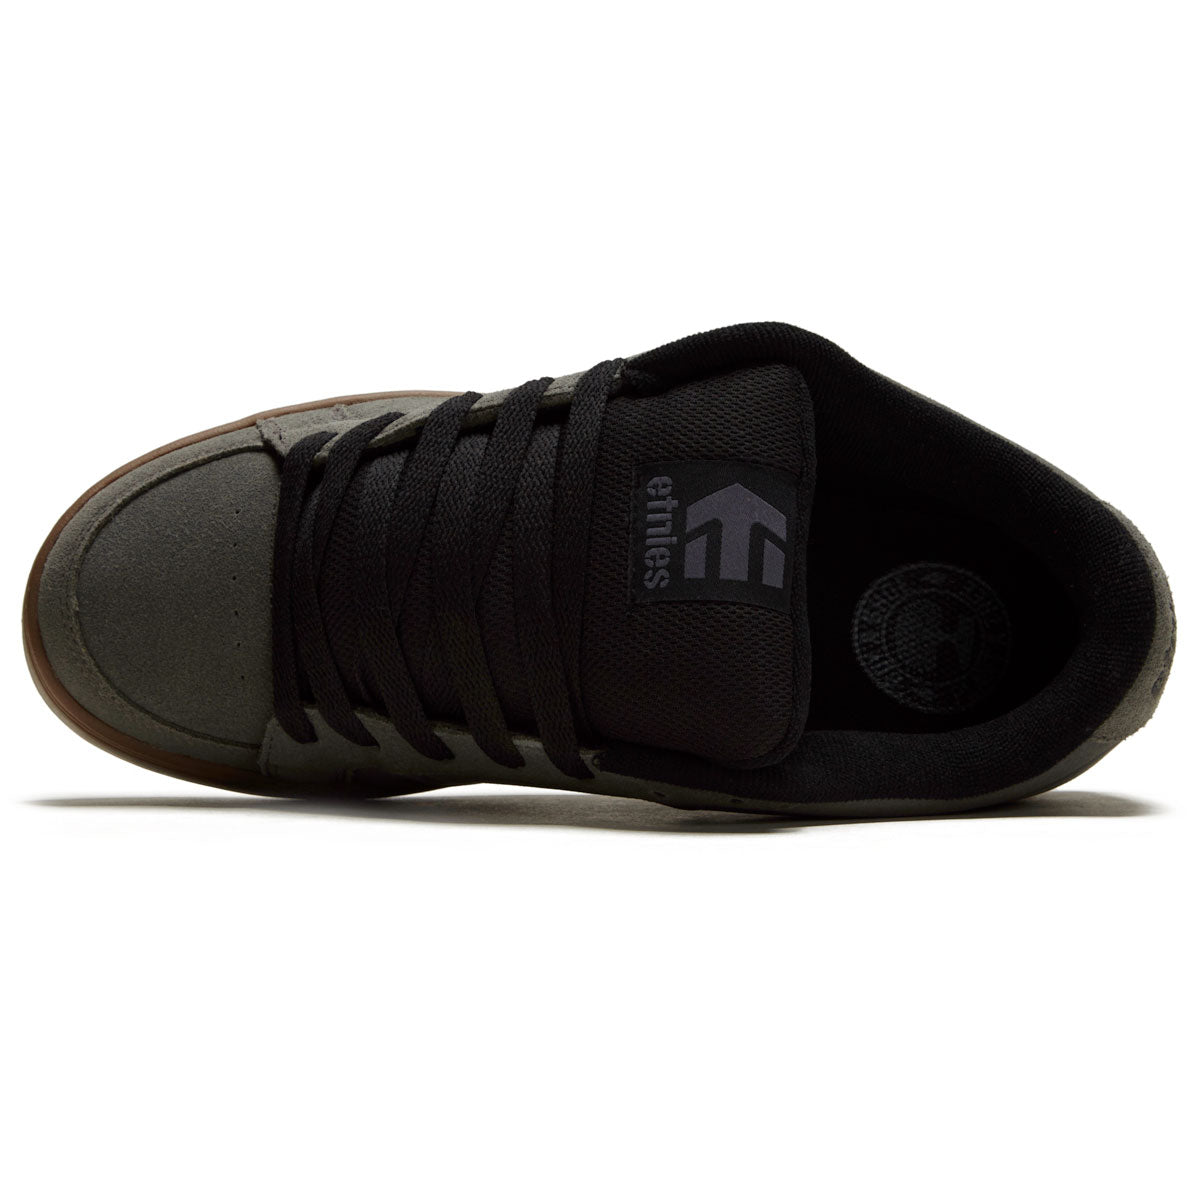 Etnies Kingpin Shoes - Grey/Black/Gum image 3